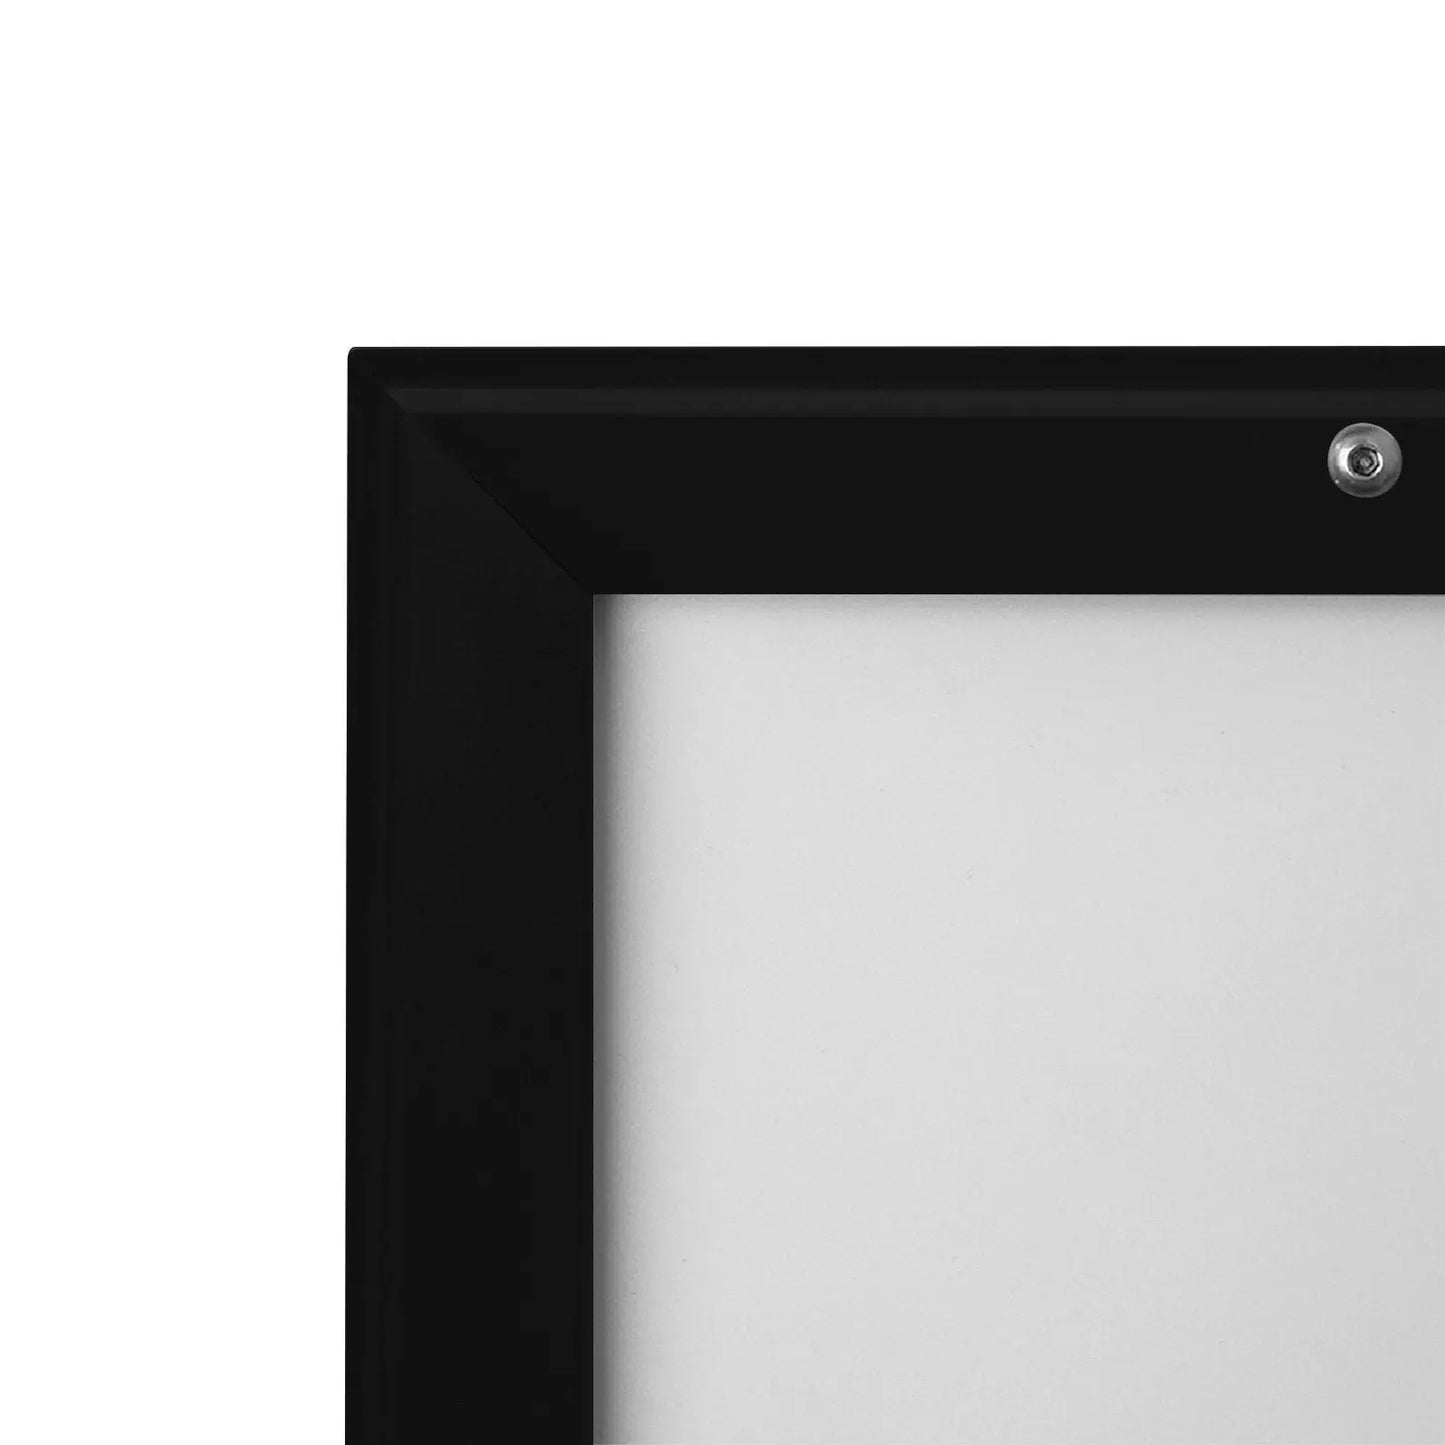 Black locking snap frame poster size 24X36 - 1.25 inch profile - Snap Frames Direct